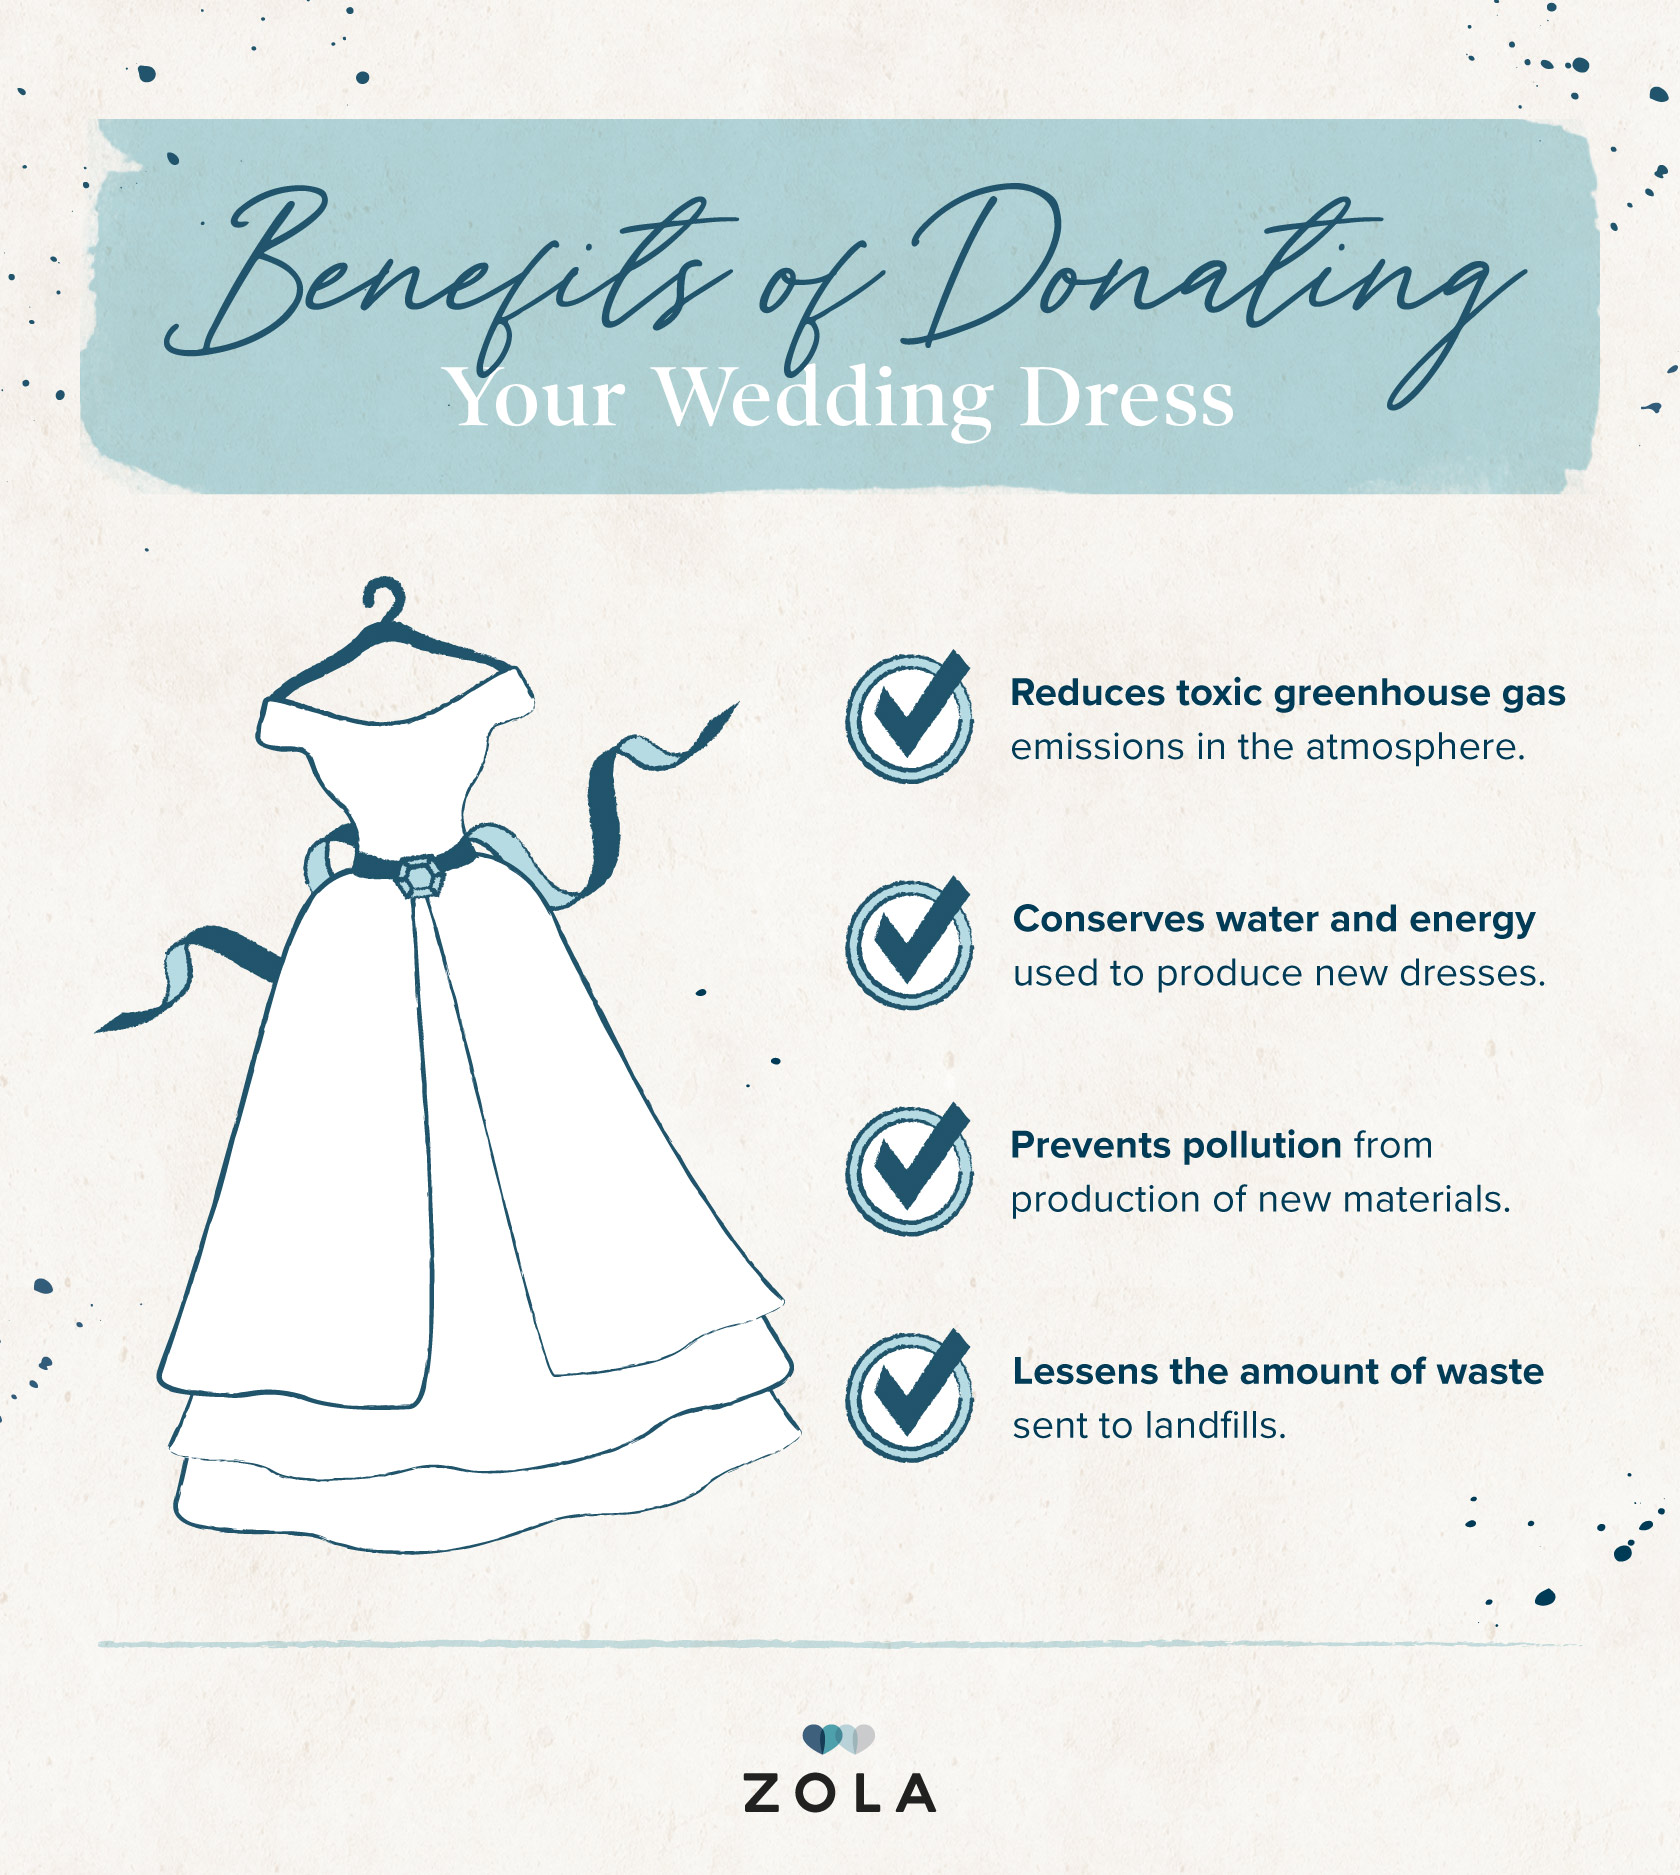 Benefits of donating your wedding dress image